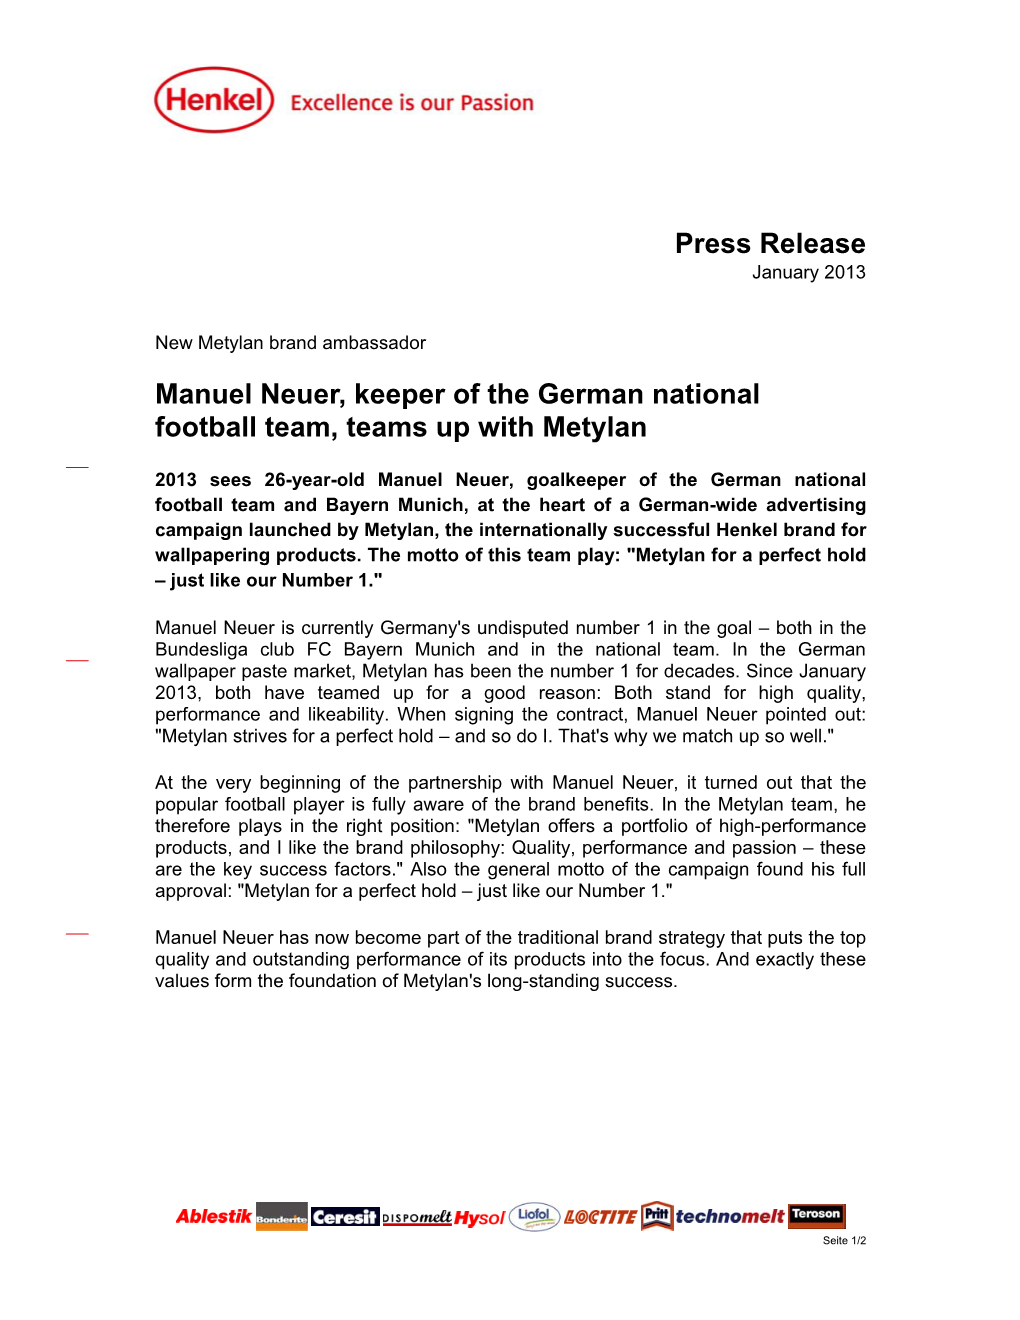 Press Release Manuel Neuer, Keeper of the German National Football